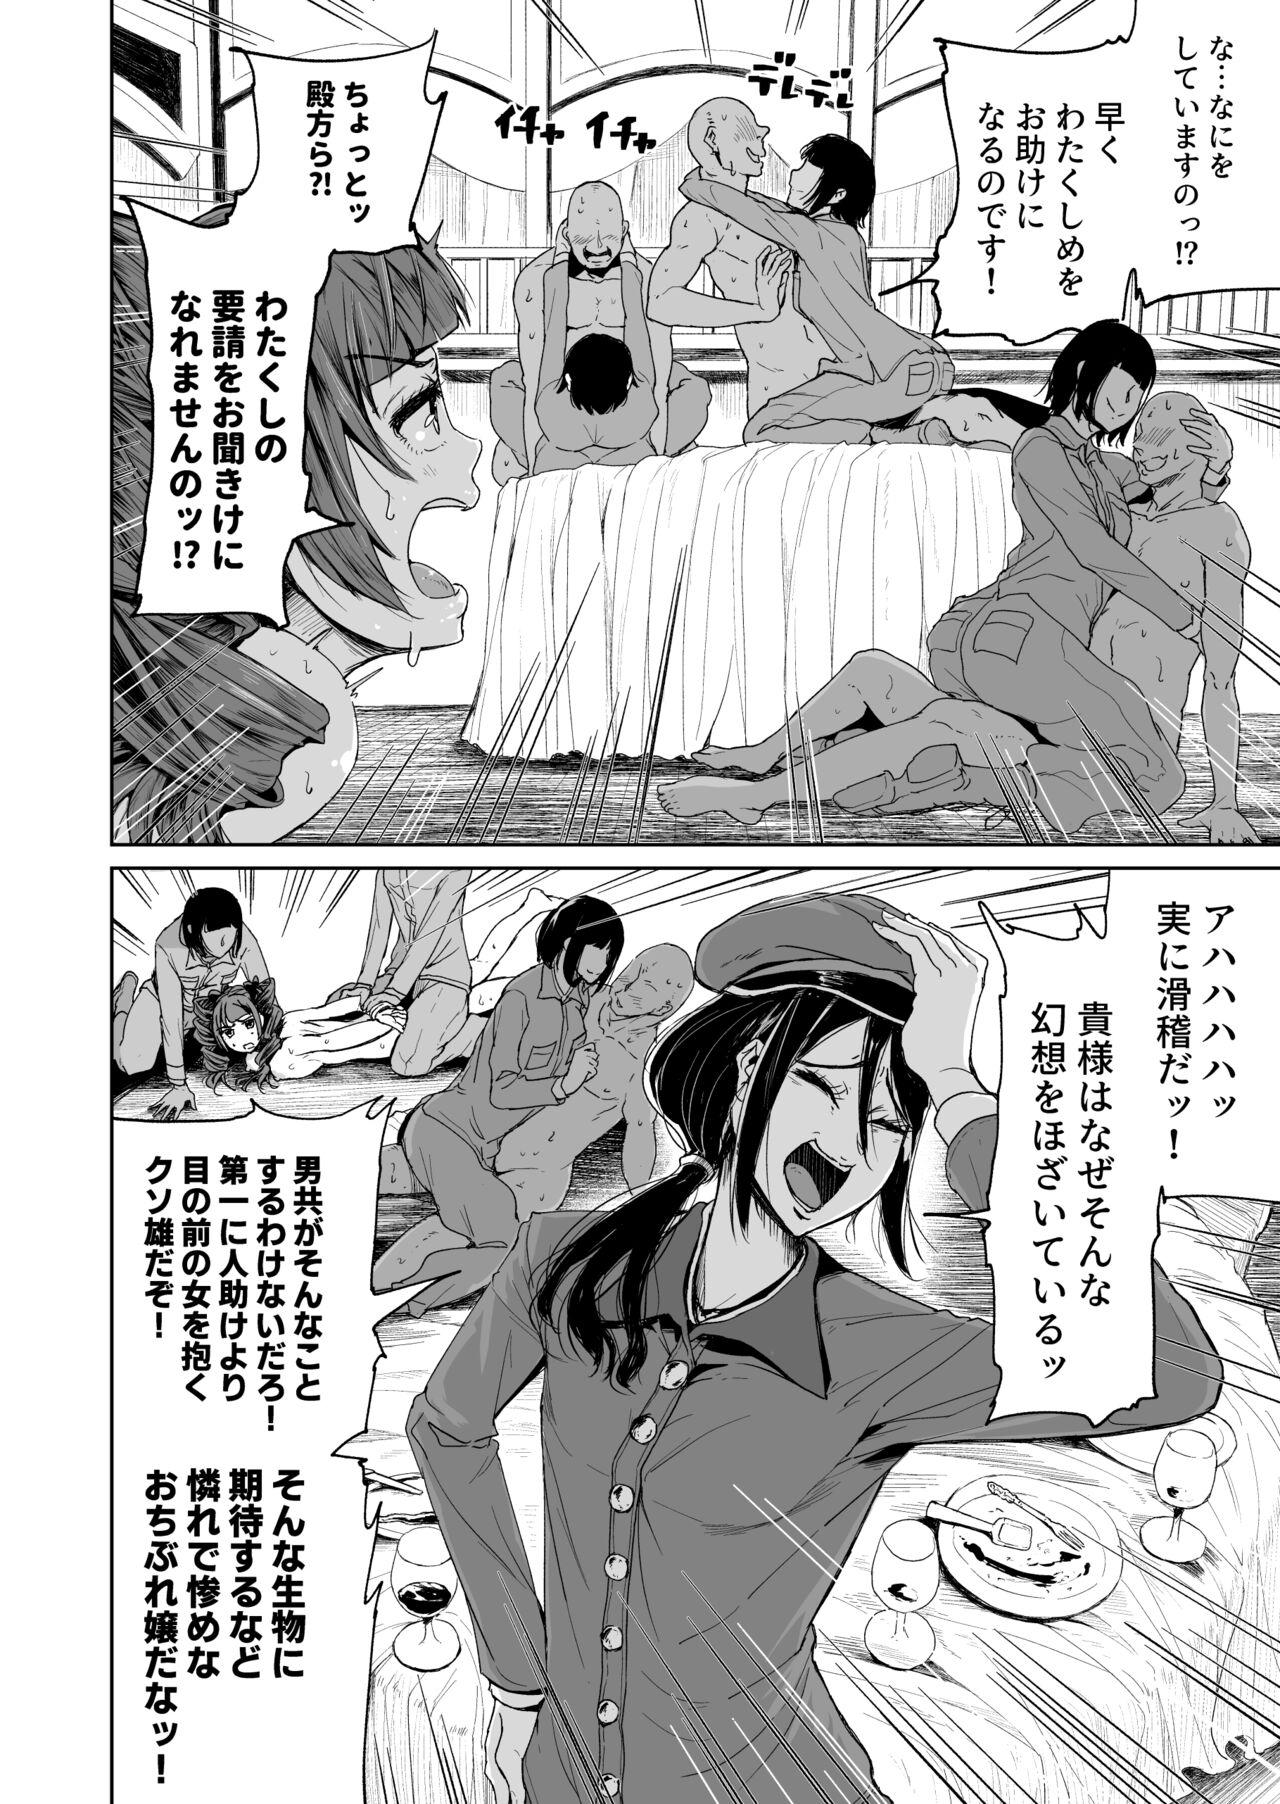 Red [Tomihero,] Onaho ni naritai ojousama - SEX Saves the World - Scene 7 Small - Page 5